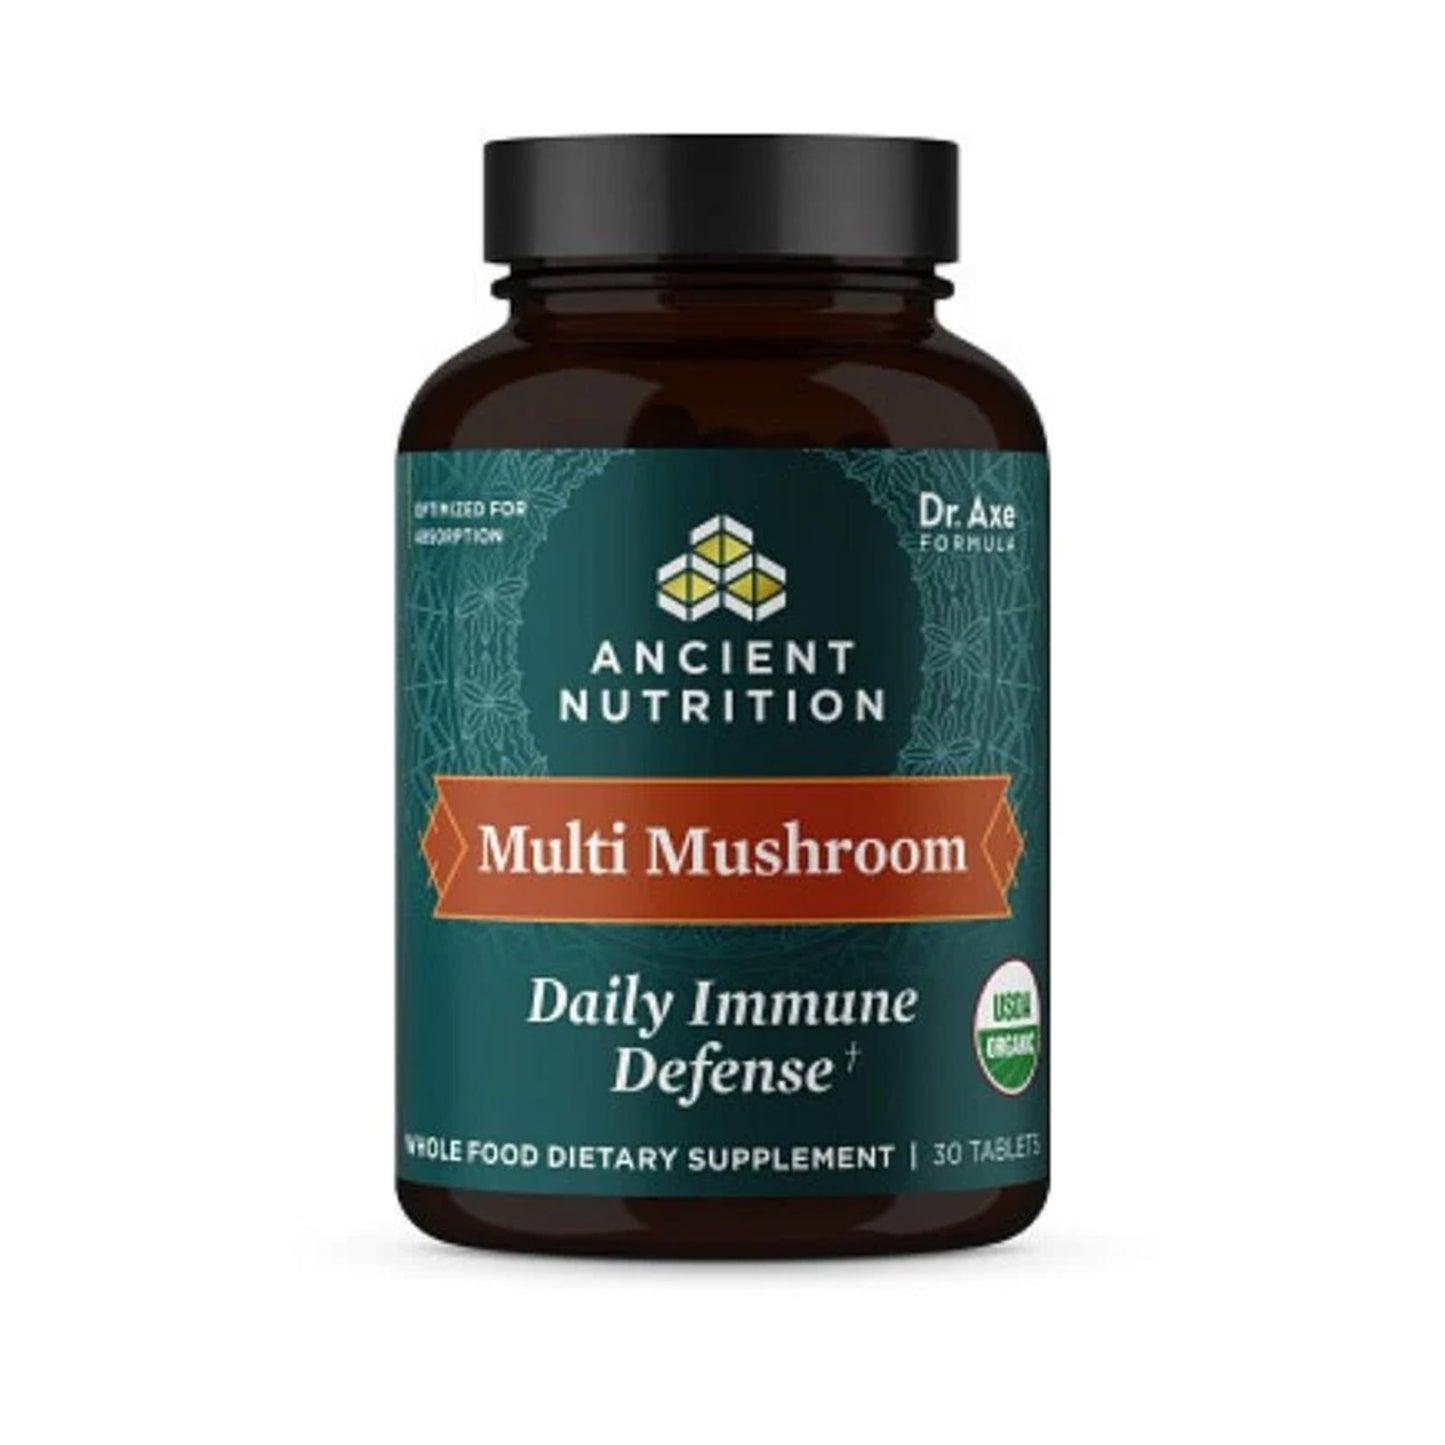 Ancient Nutrition Multi Mushroom Daily Immune Defense - Refuerza tu Sistema Inmunológico con 30 Cápsulas | ProHealth Shop [Panamá]